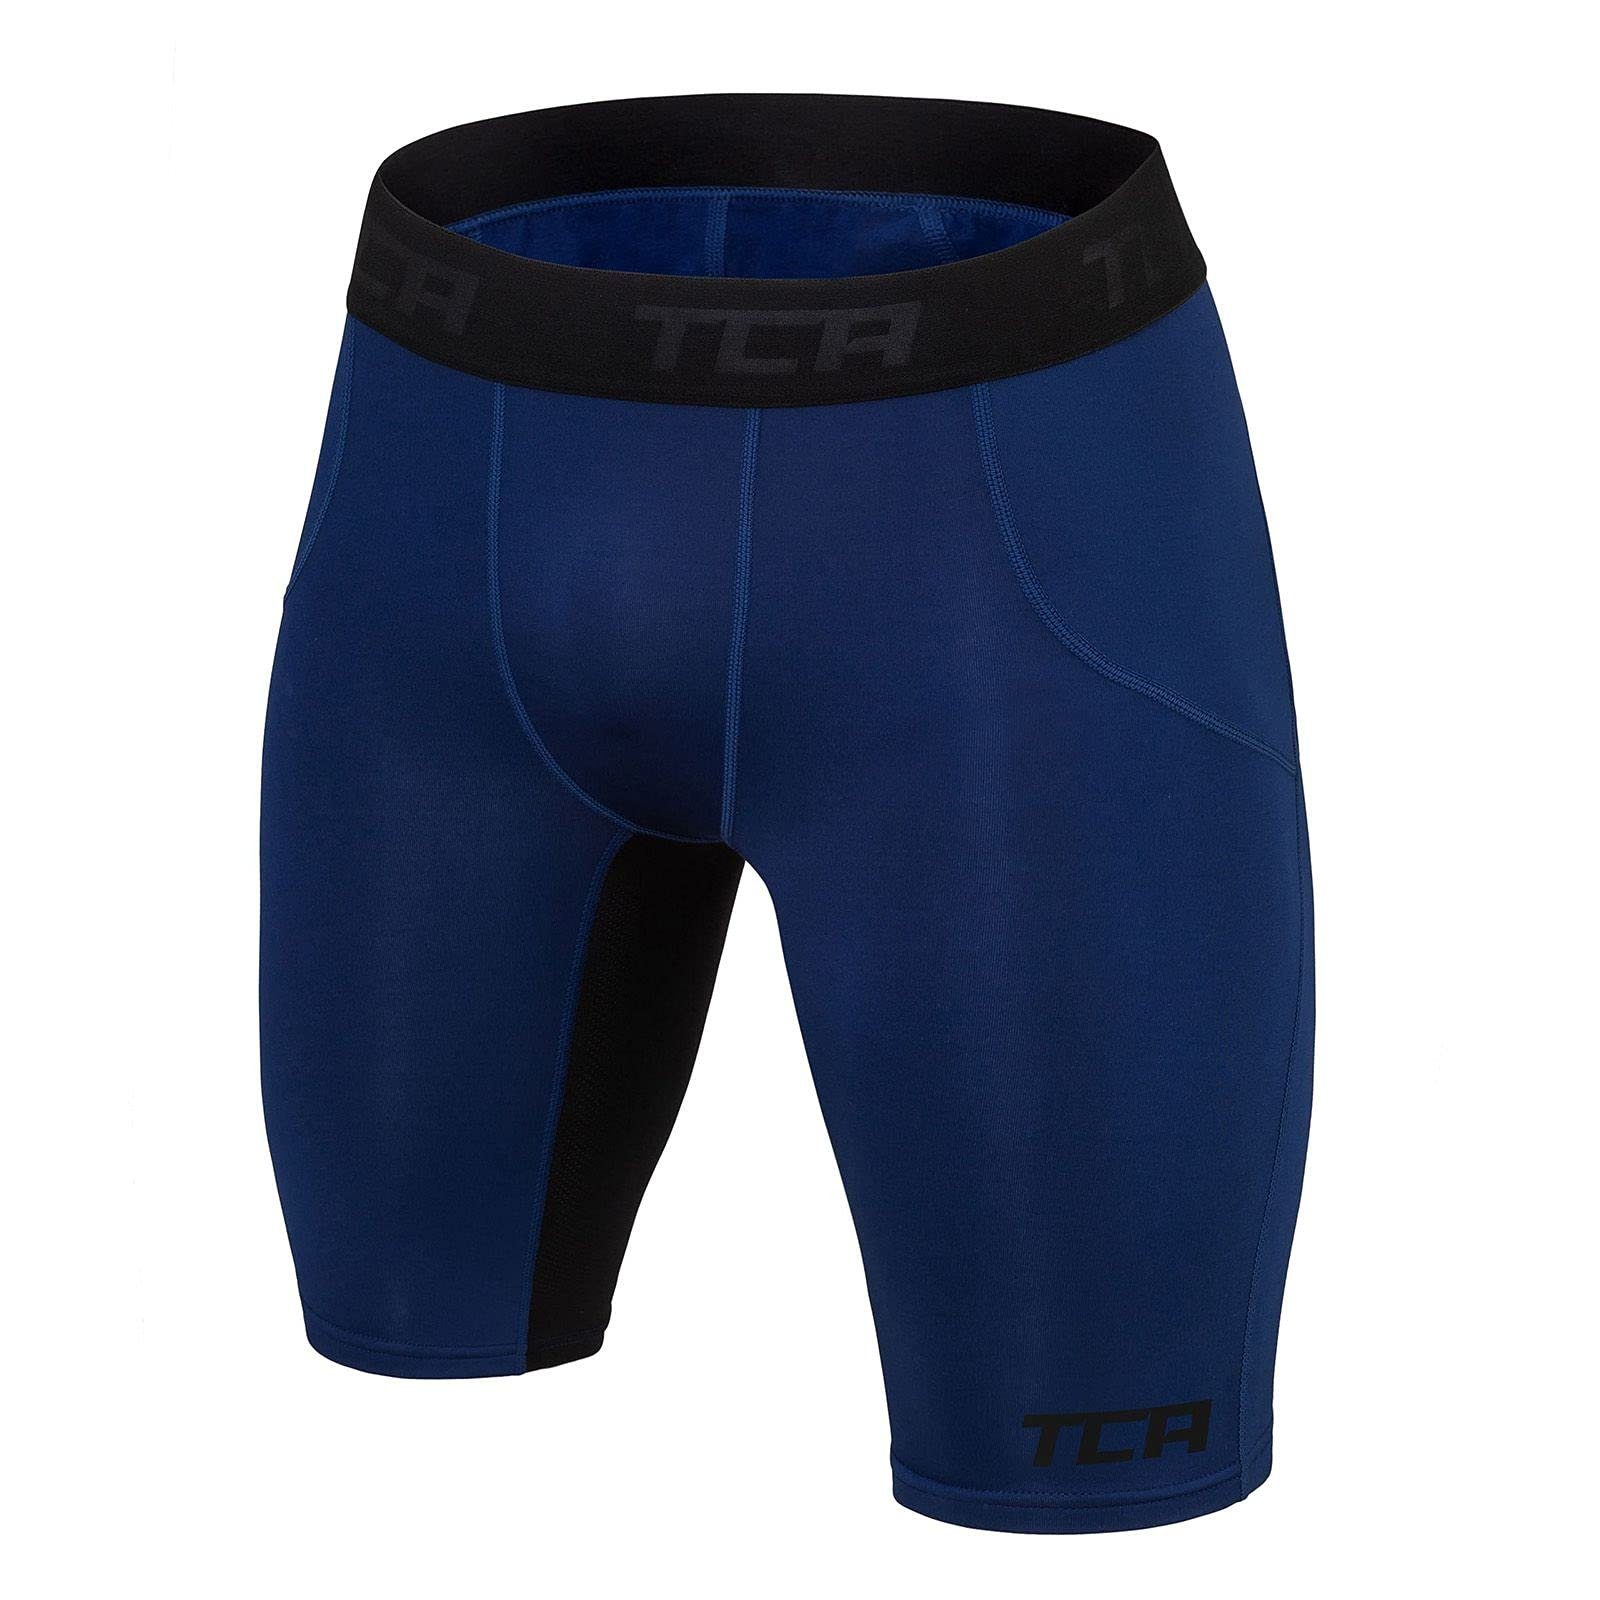 Extrem günstige Artikel TCA Unterziehshirt Blau/Schwarz SuperThermal Herren TCA Shorts - Kompressions